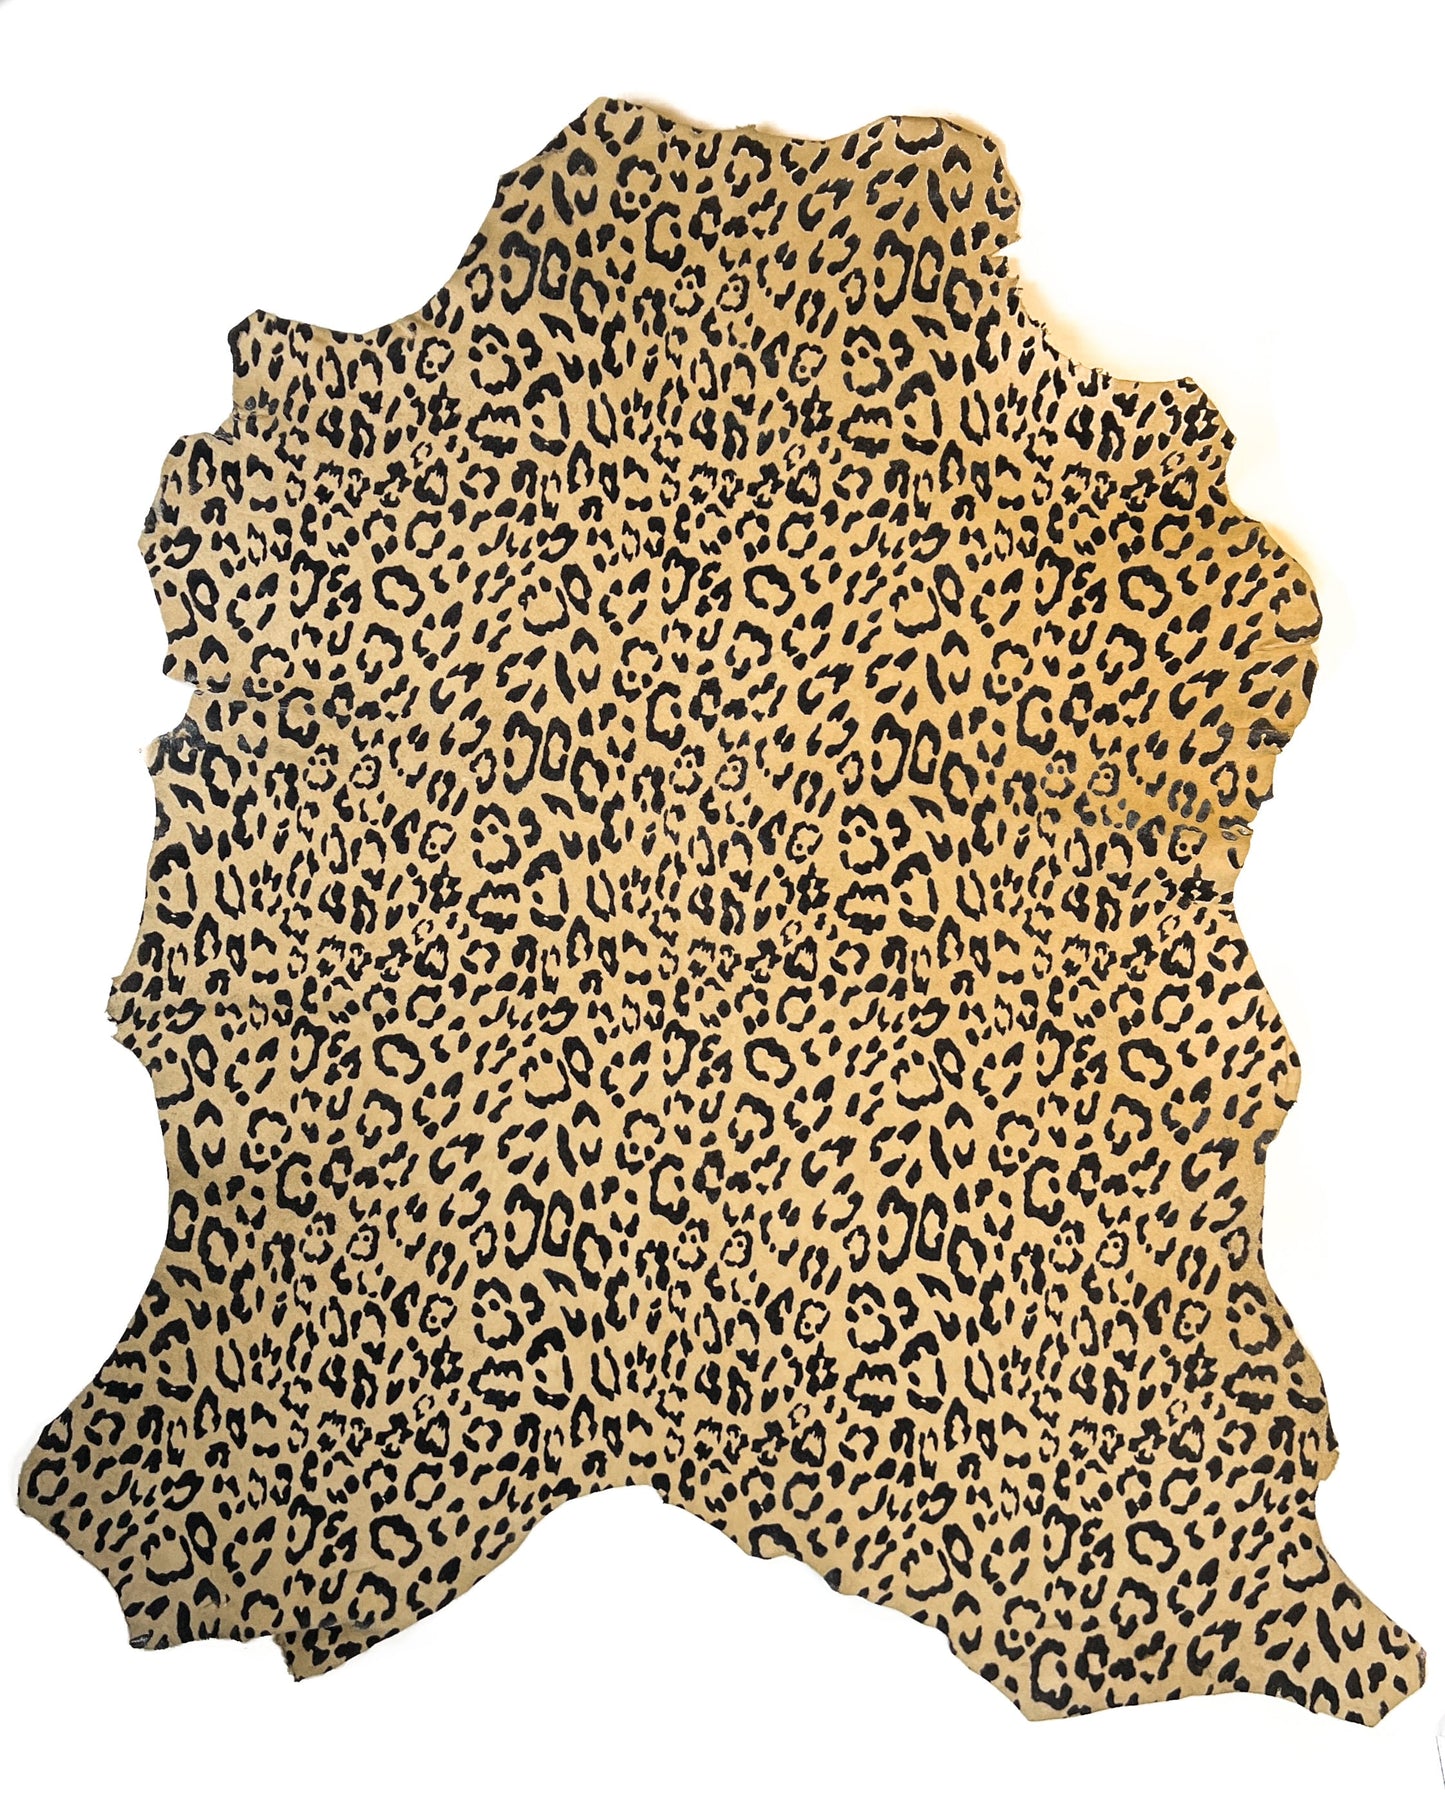 Beige Black Lambskin Suede With Leopard Print 0.8-1.2mm / 2-3oz